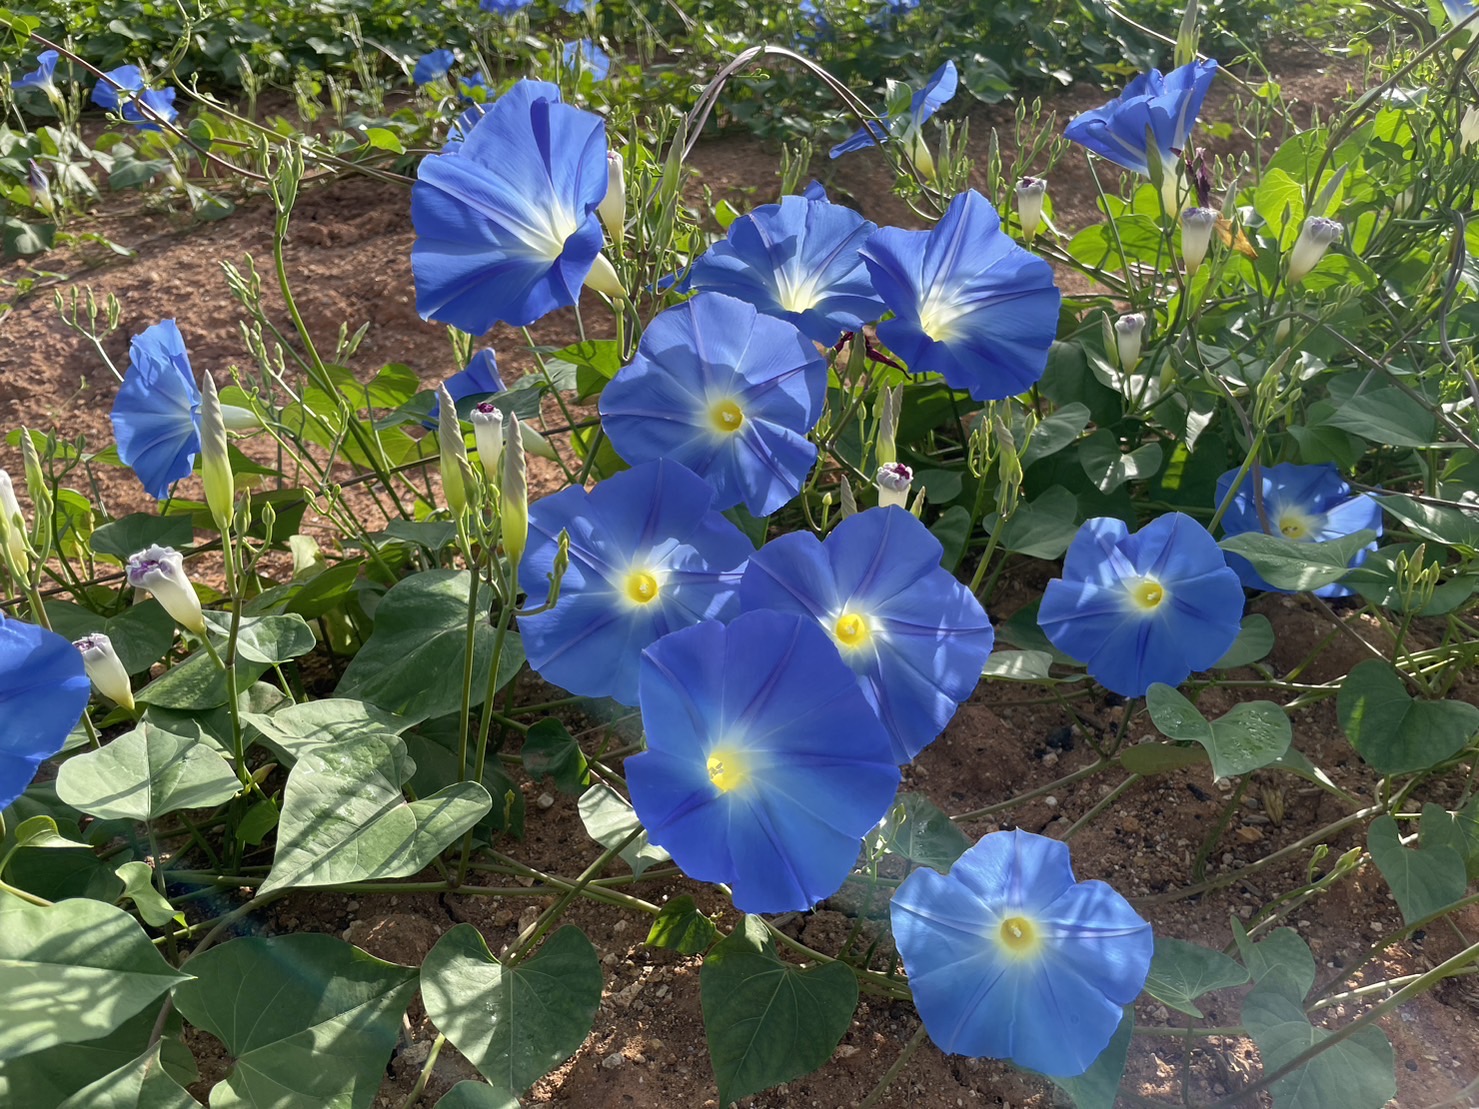 【Park open】Heavenly Blue(70% flowering)・Marigold(Best time for viewing)・Kochia(Best time for viewing)